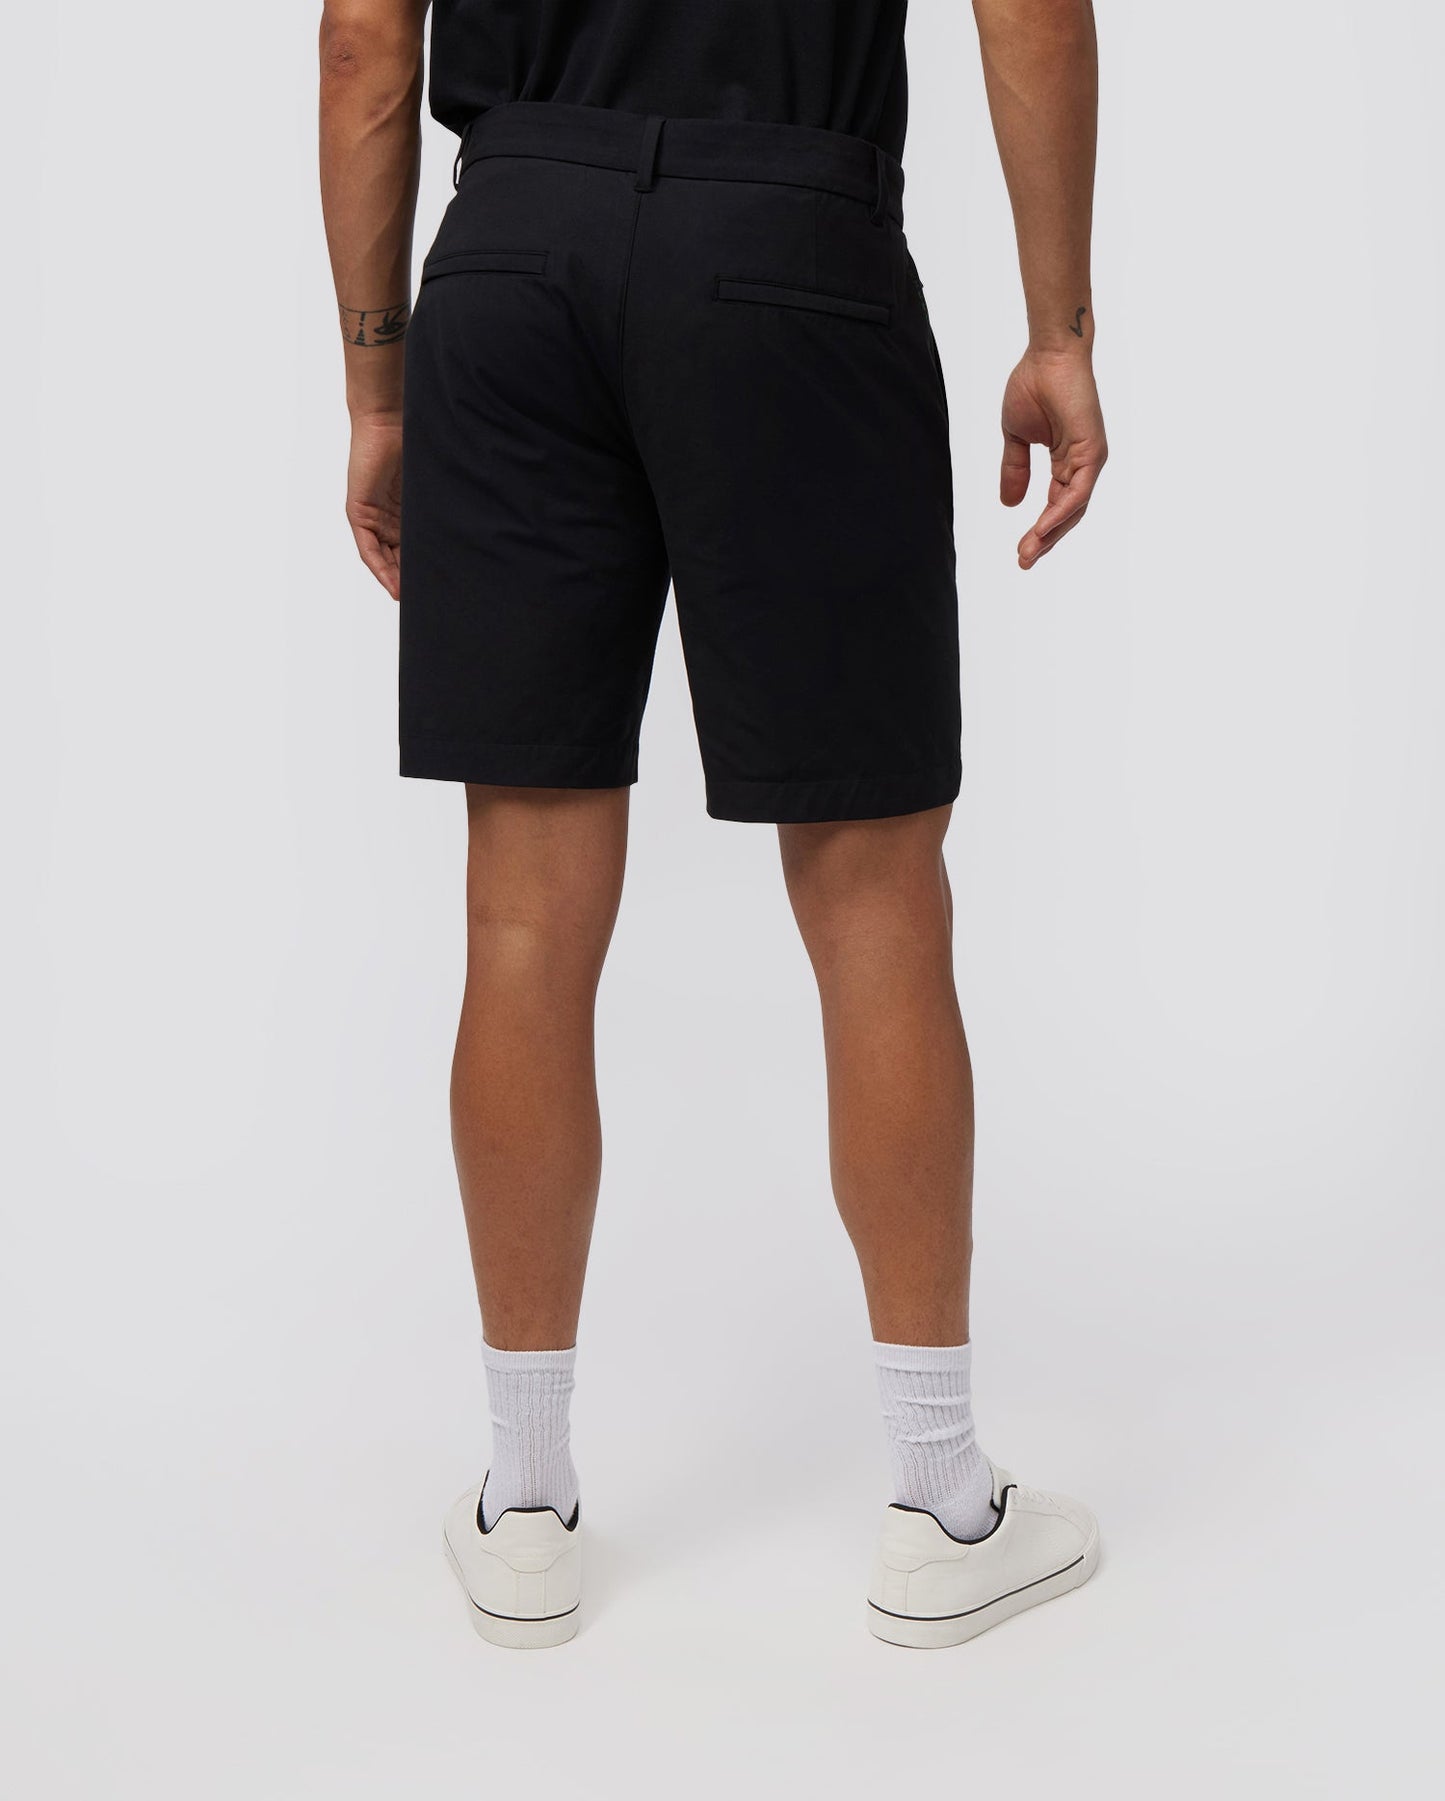 Vertical Striped Men's Athletic Shorts - Sporty Chimp legging, workout gear  & more